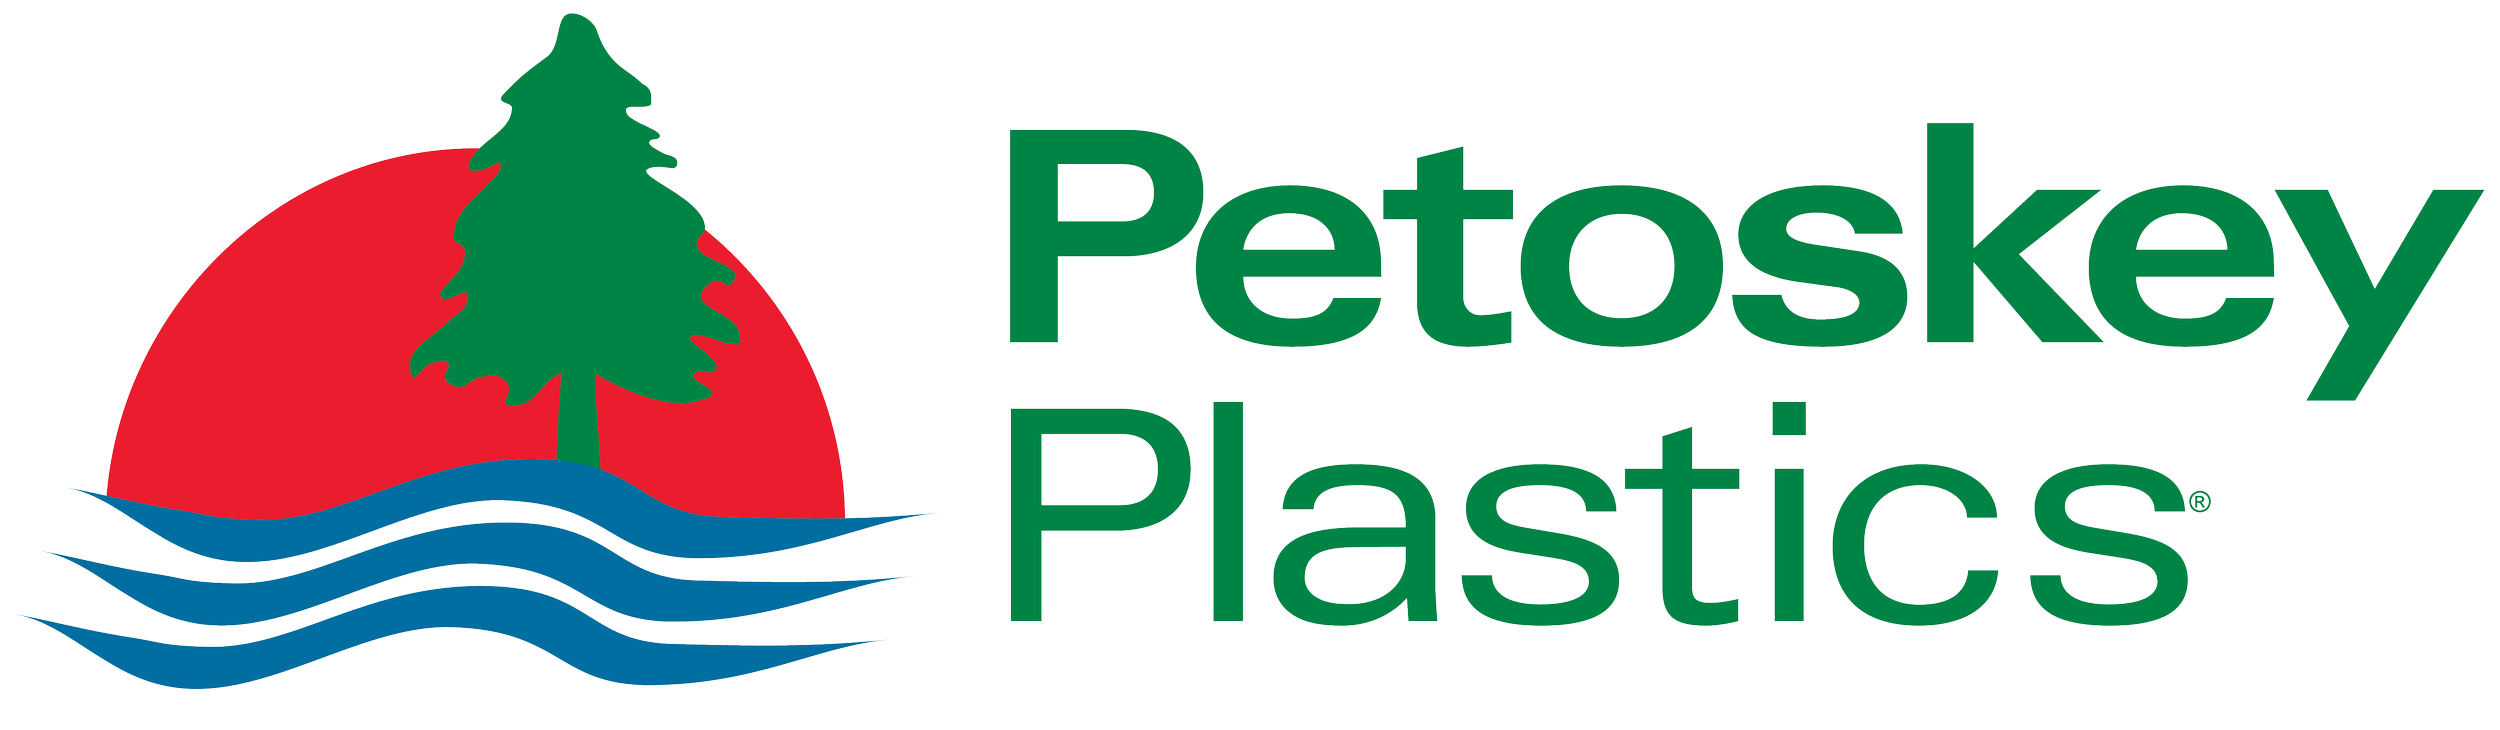 Petoskey Plastics Logo.png